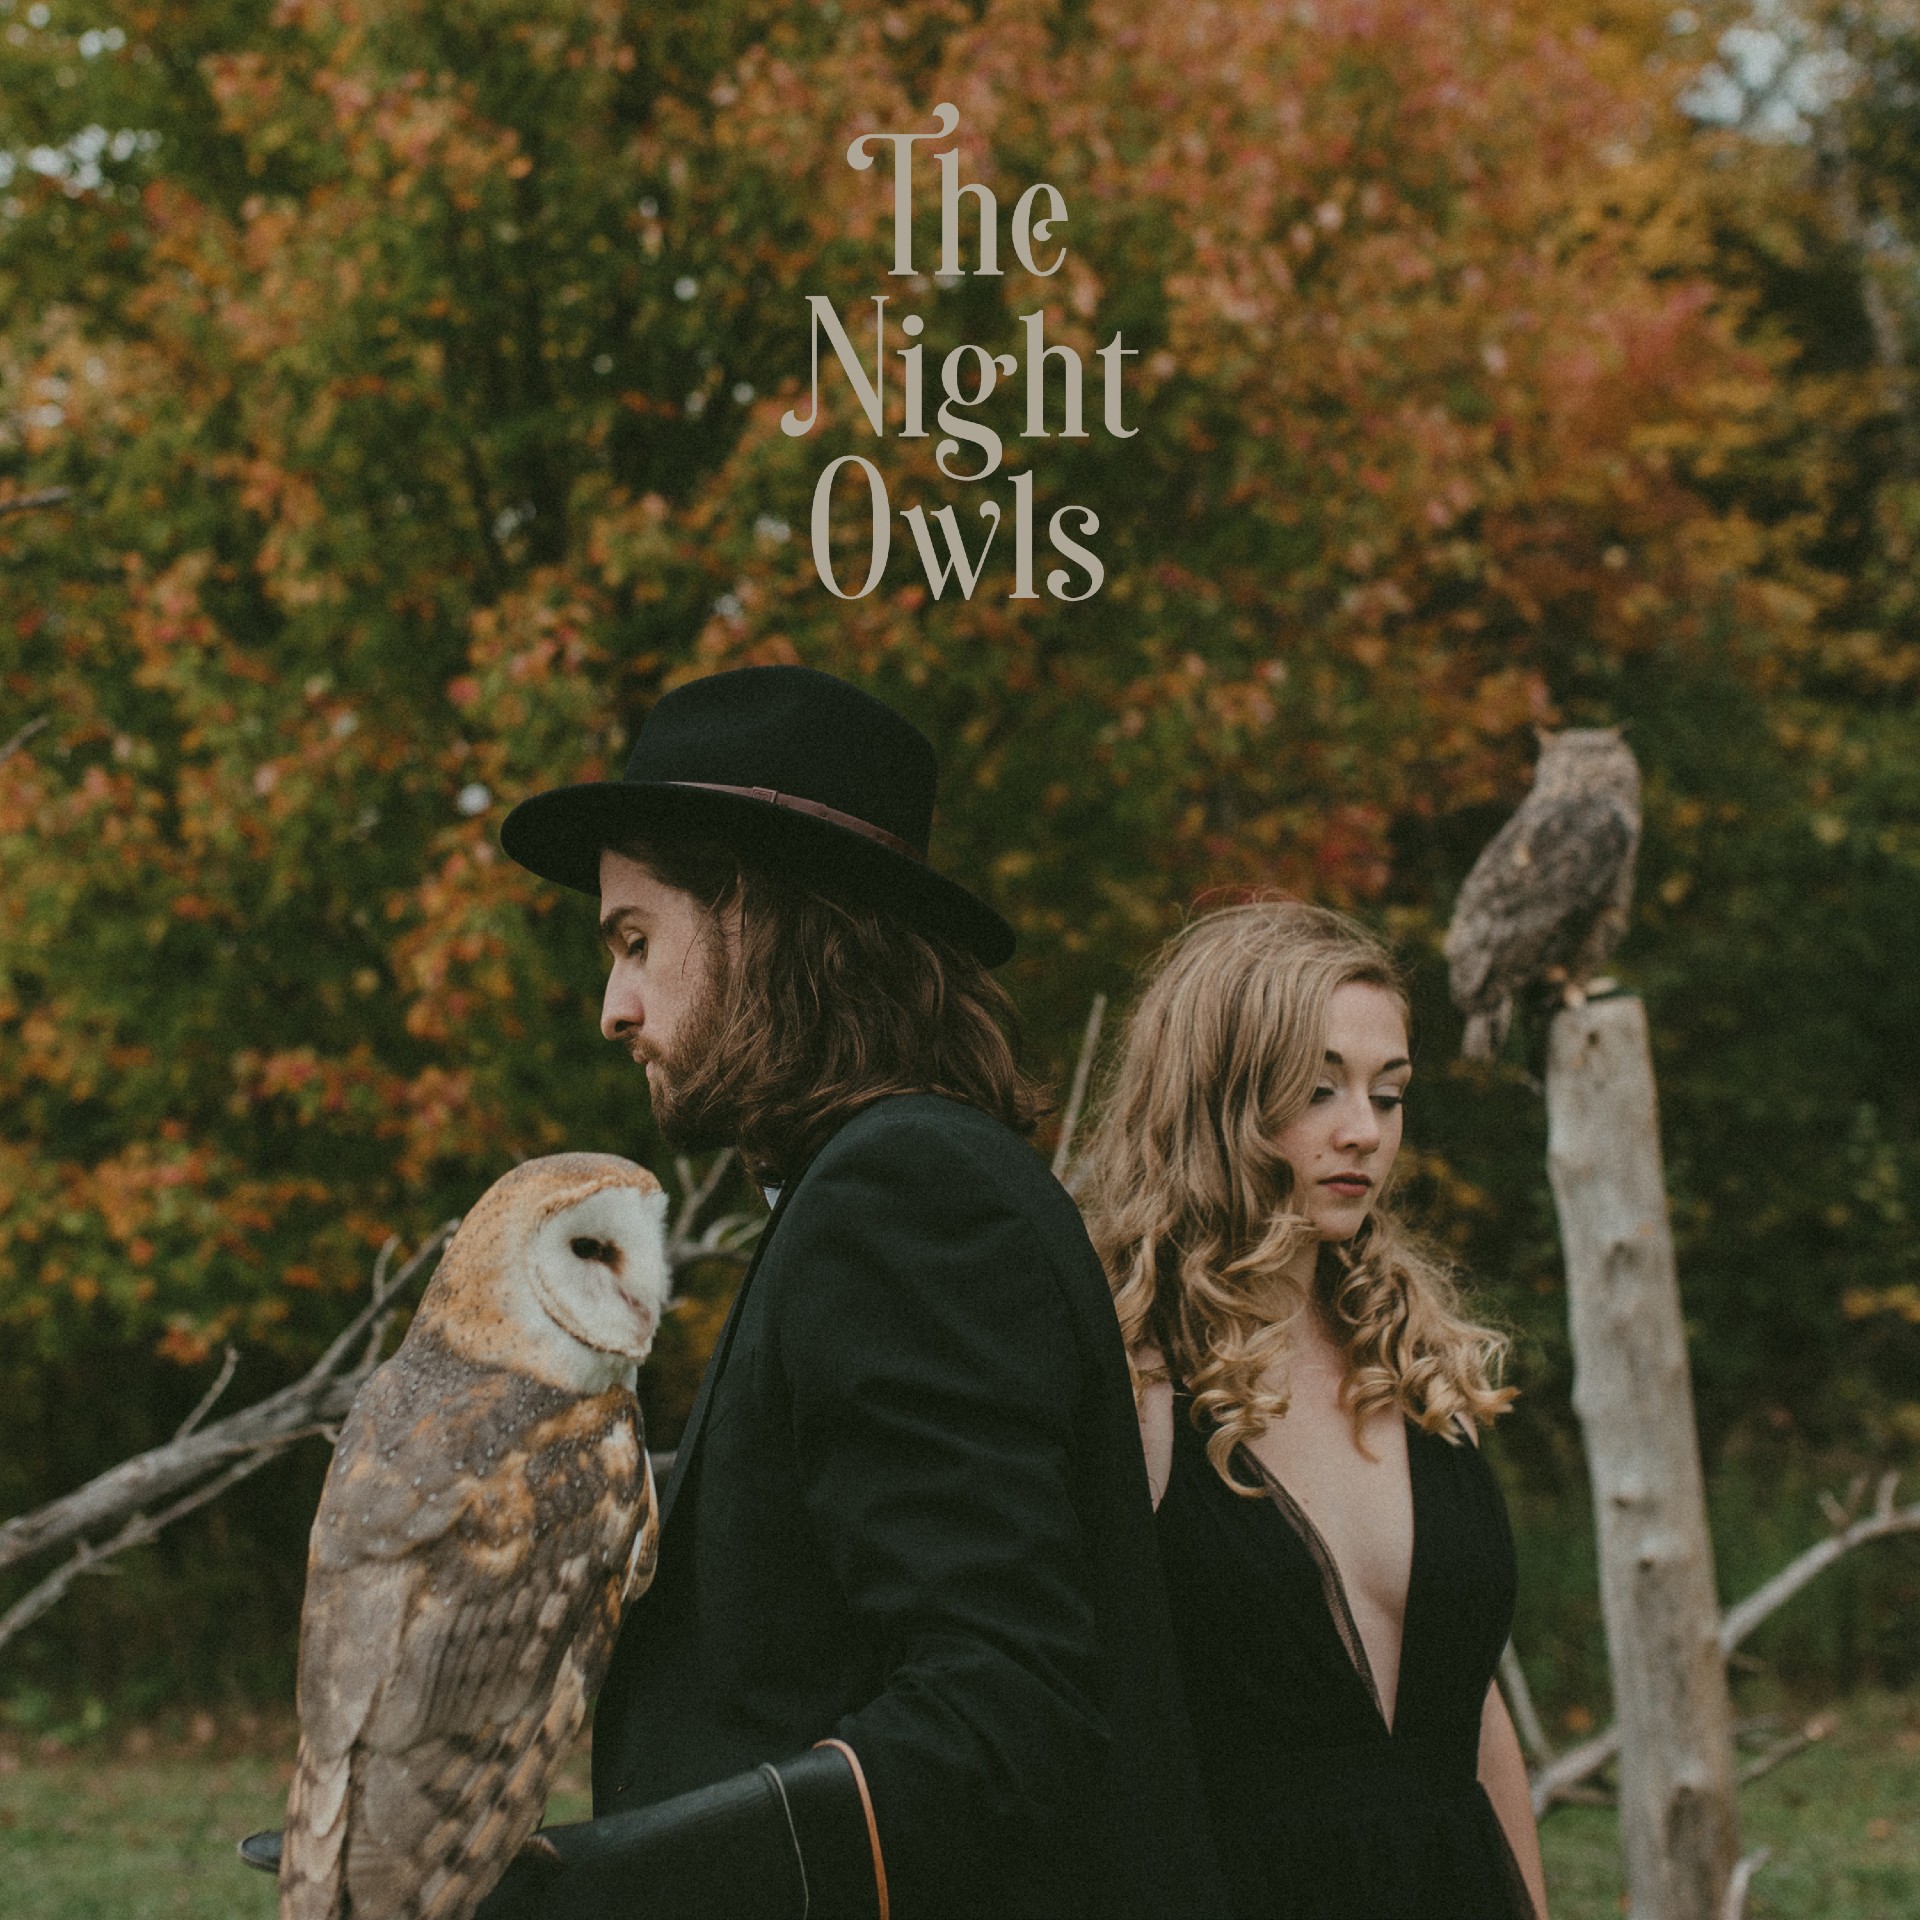 The Night Owls ‘The Night Owls’ album artwork